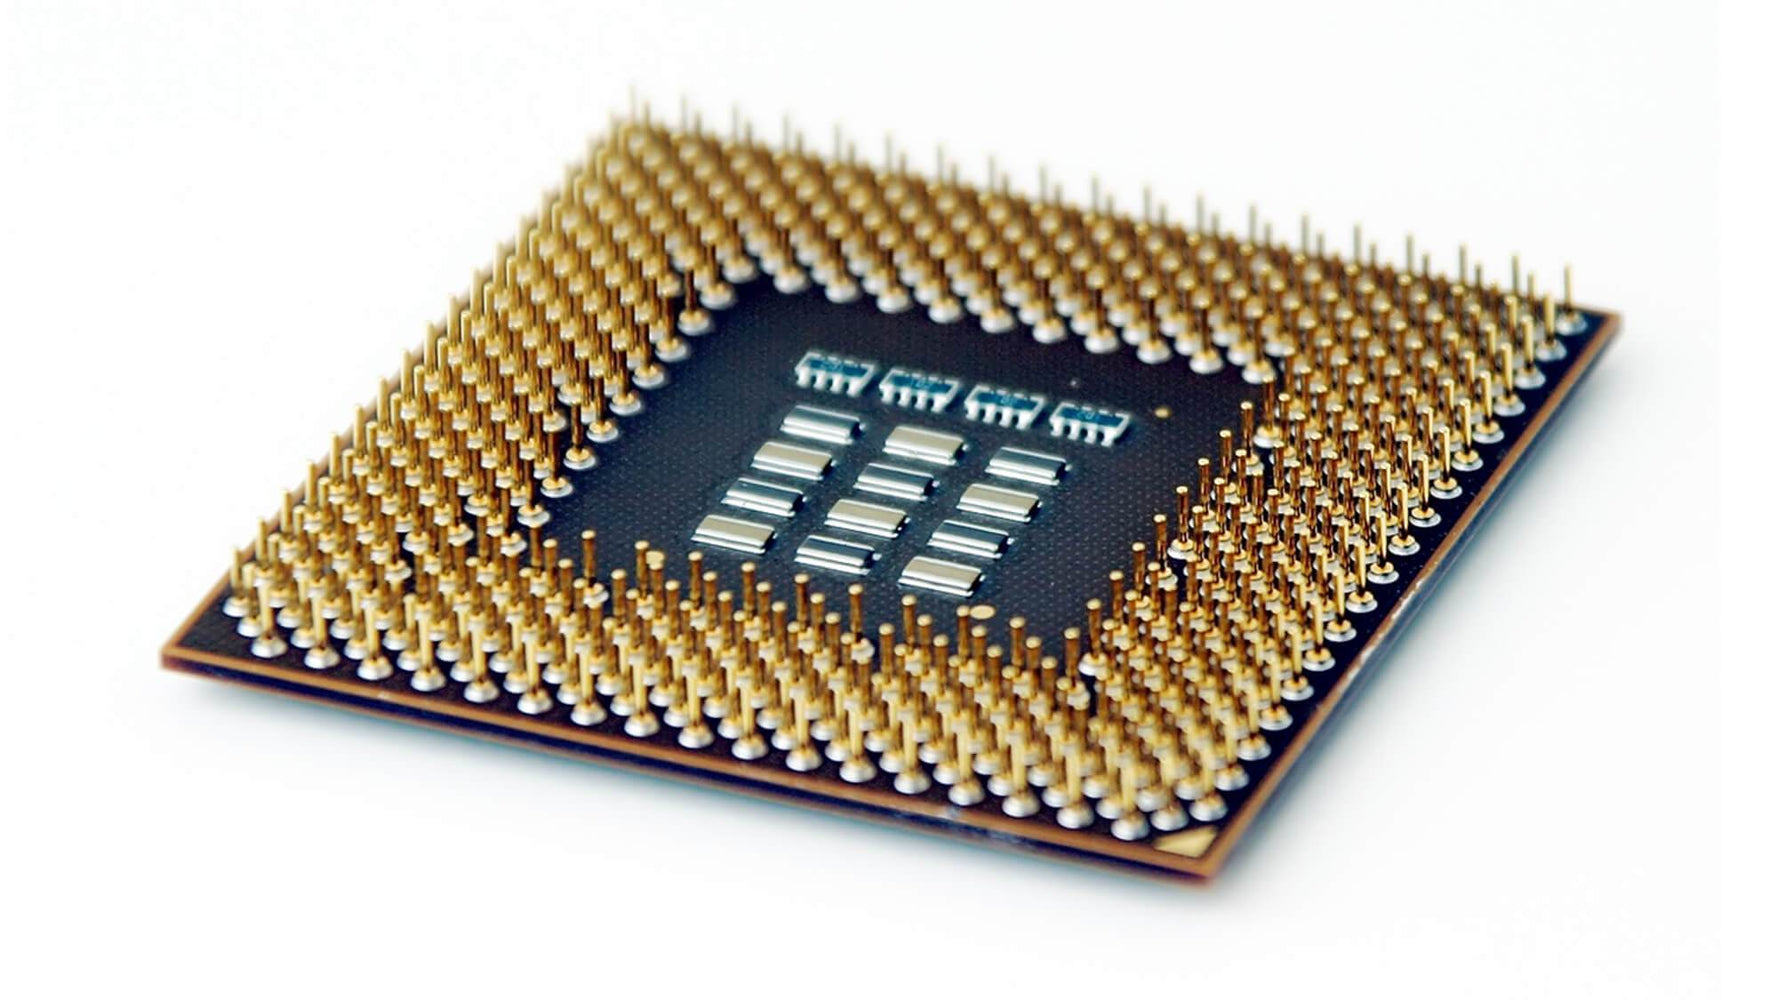 X0760 - Dell 2.40GHz 533MHz FSB 512KB L2 Cache Intel Pentium 4 Processor